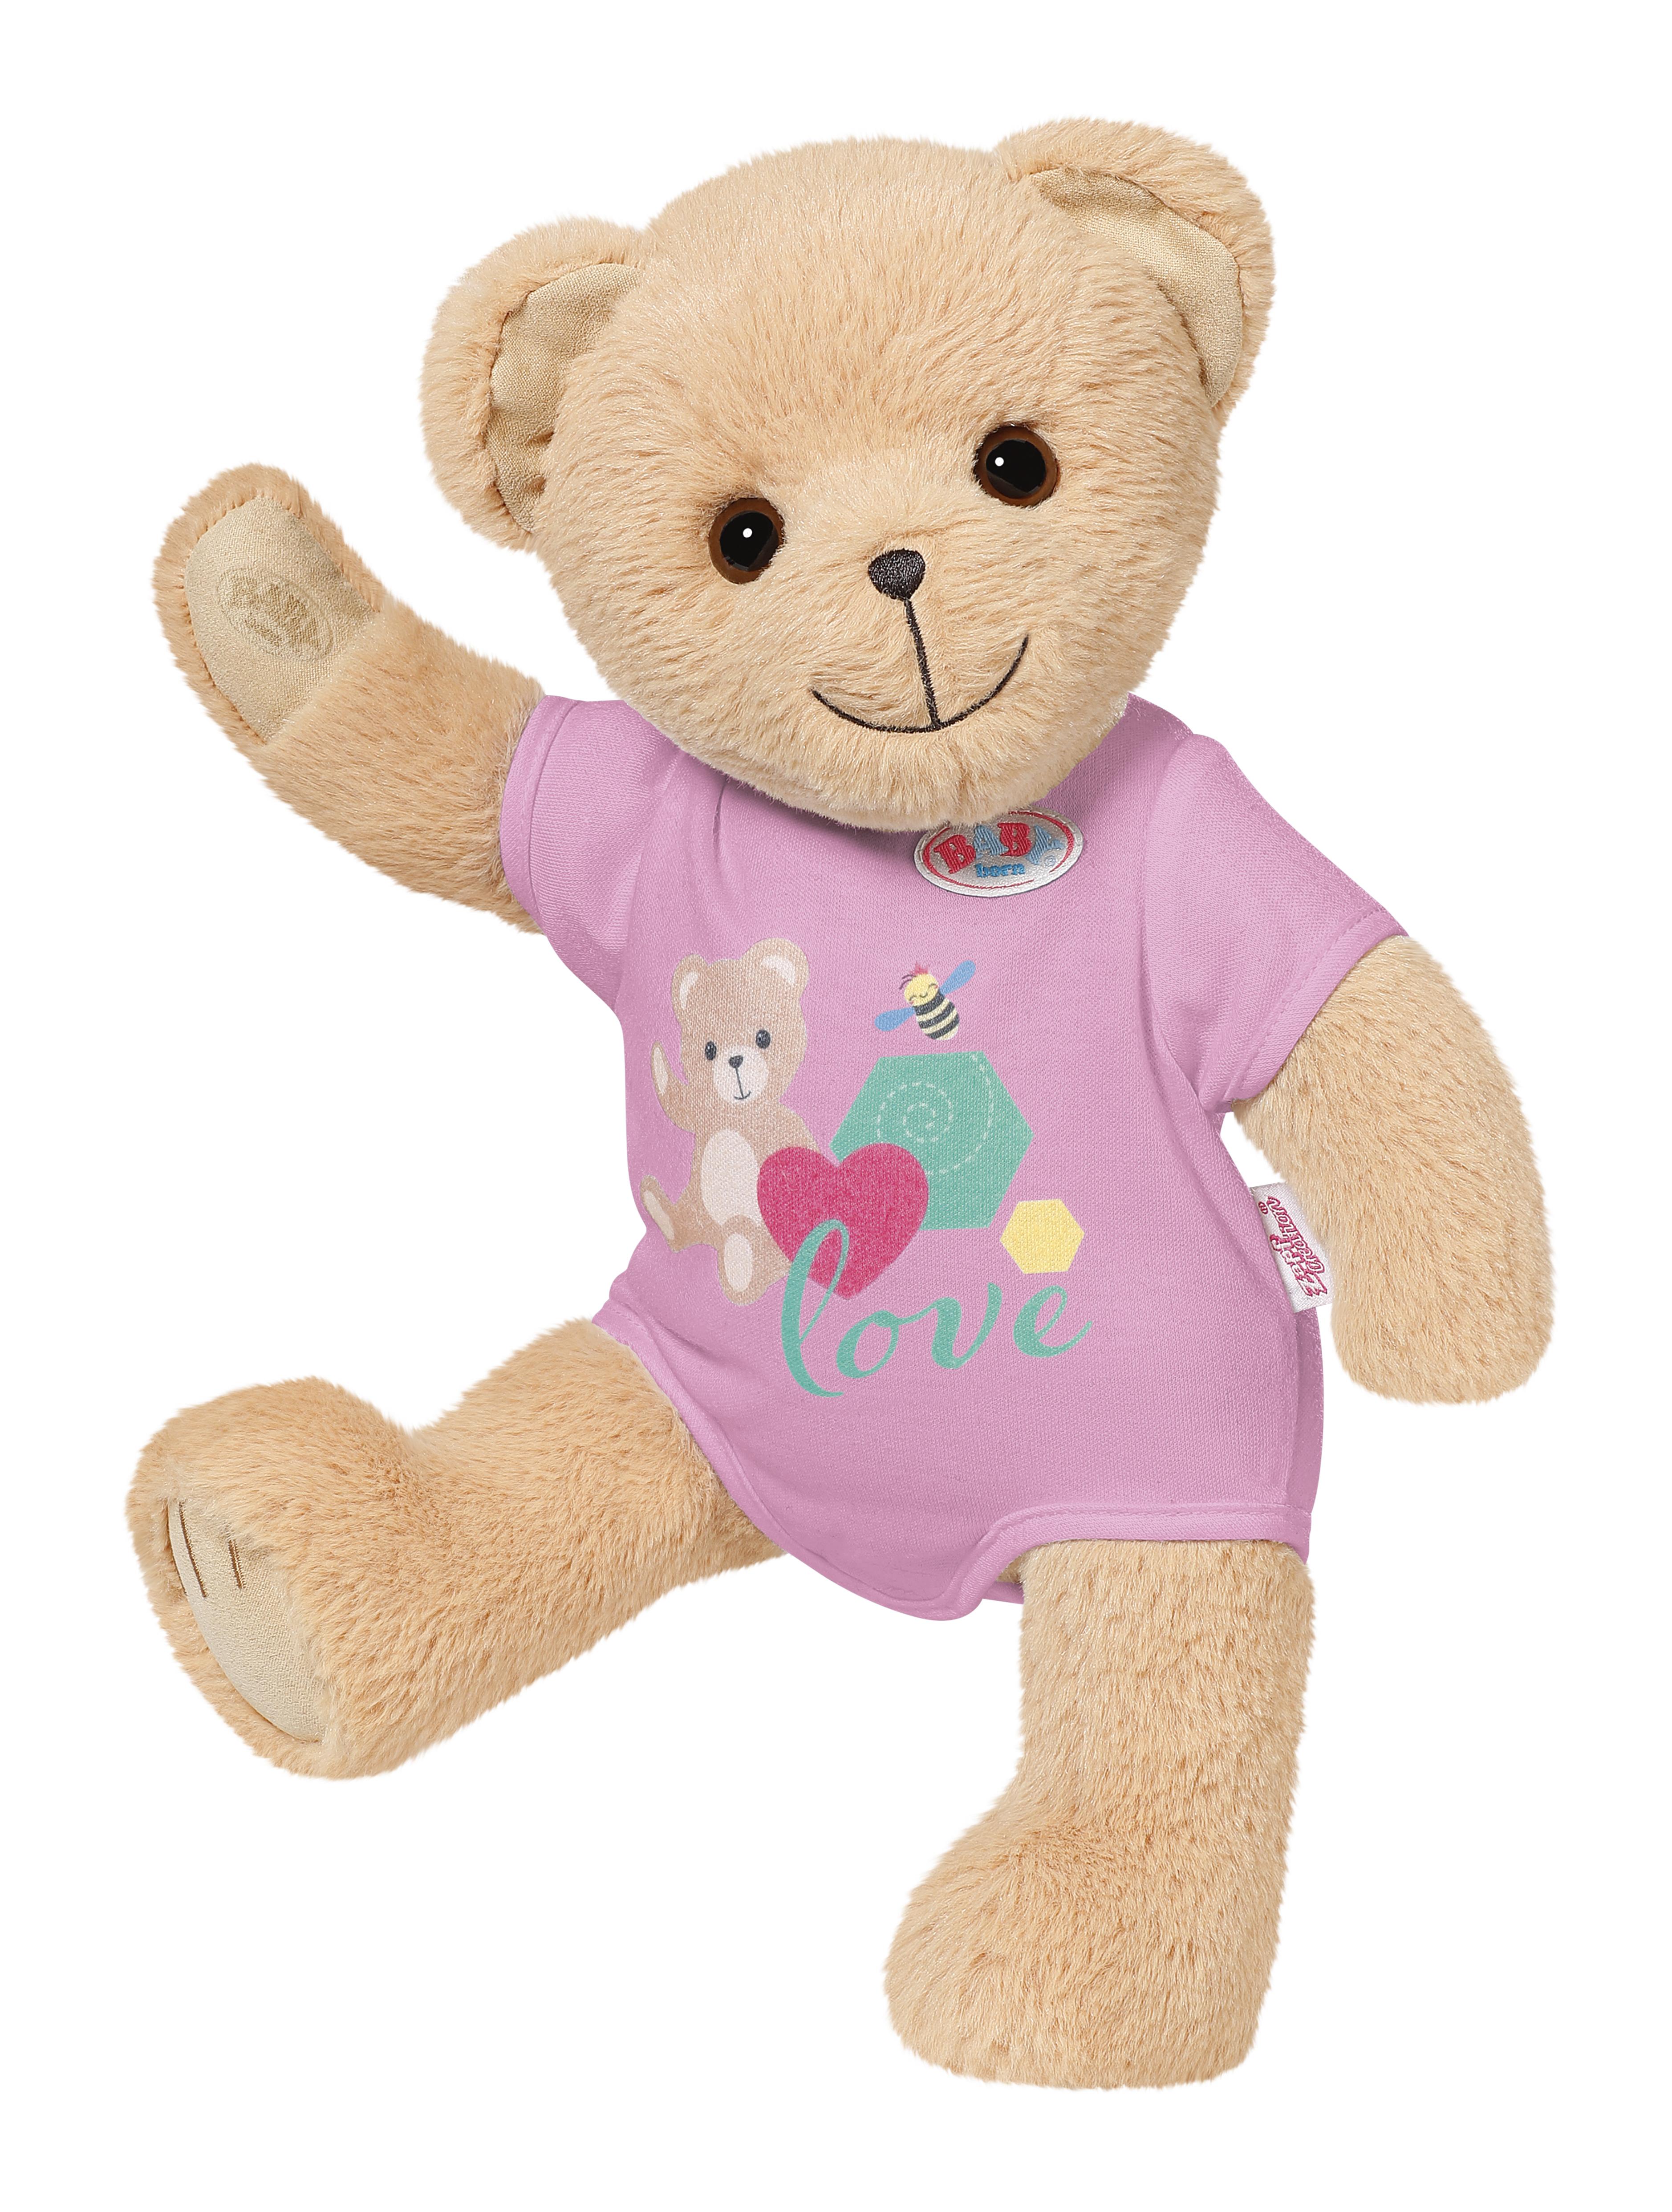 BABY born - Bear pink 36cm (835609) - Leker